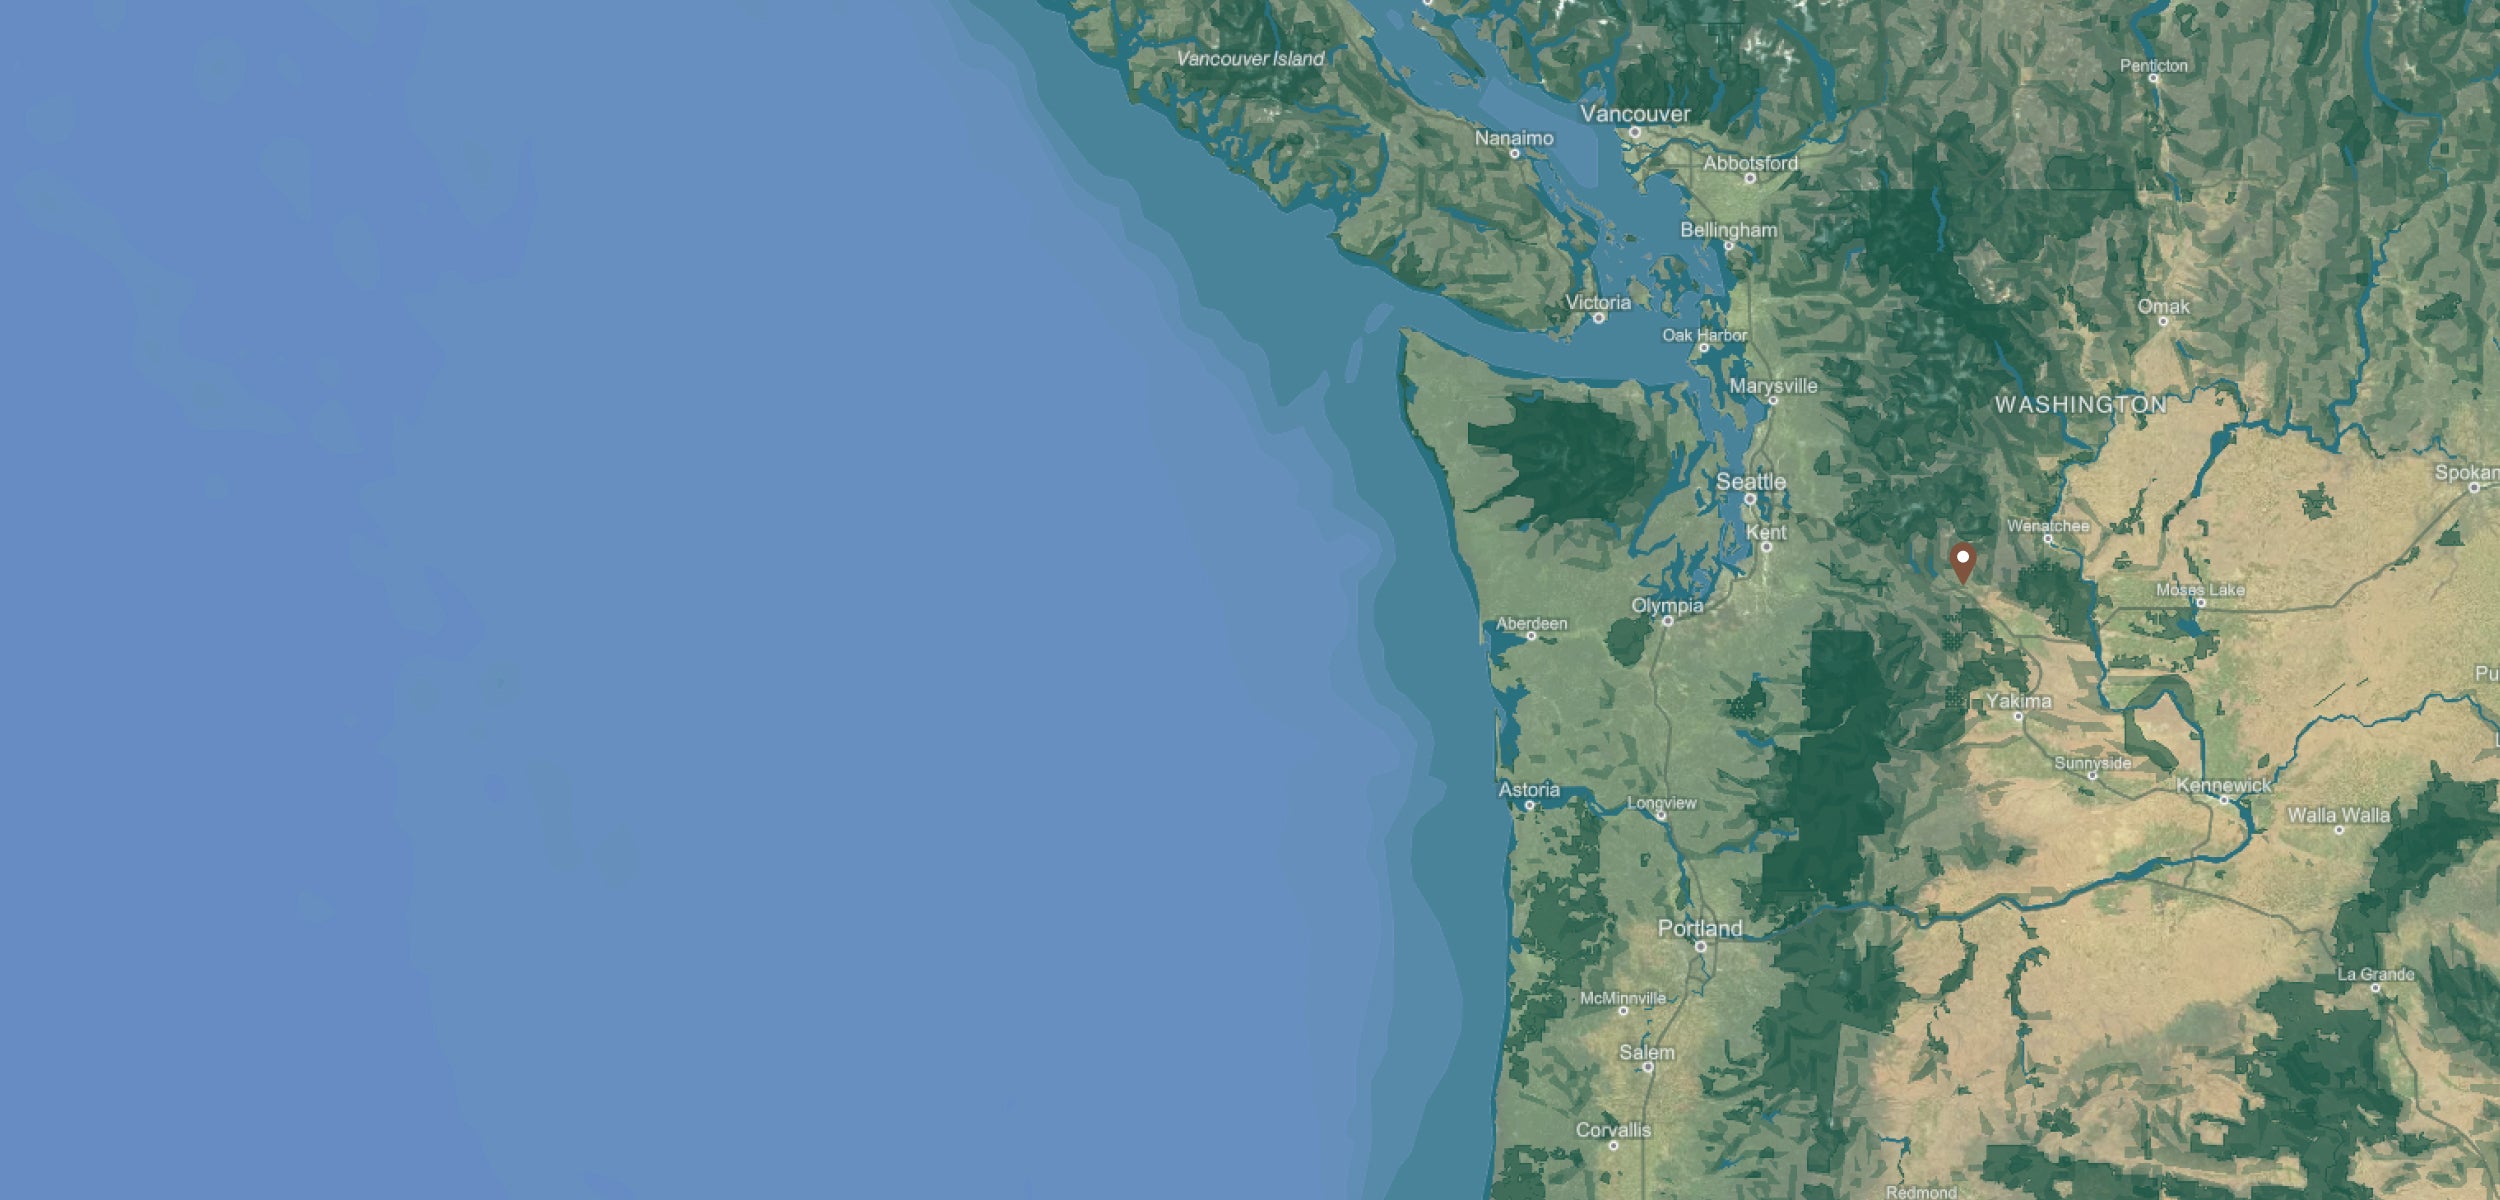 Washington State background map desktop